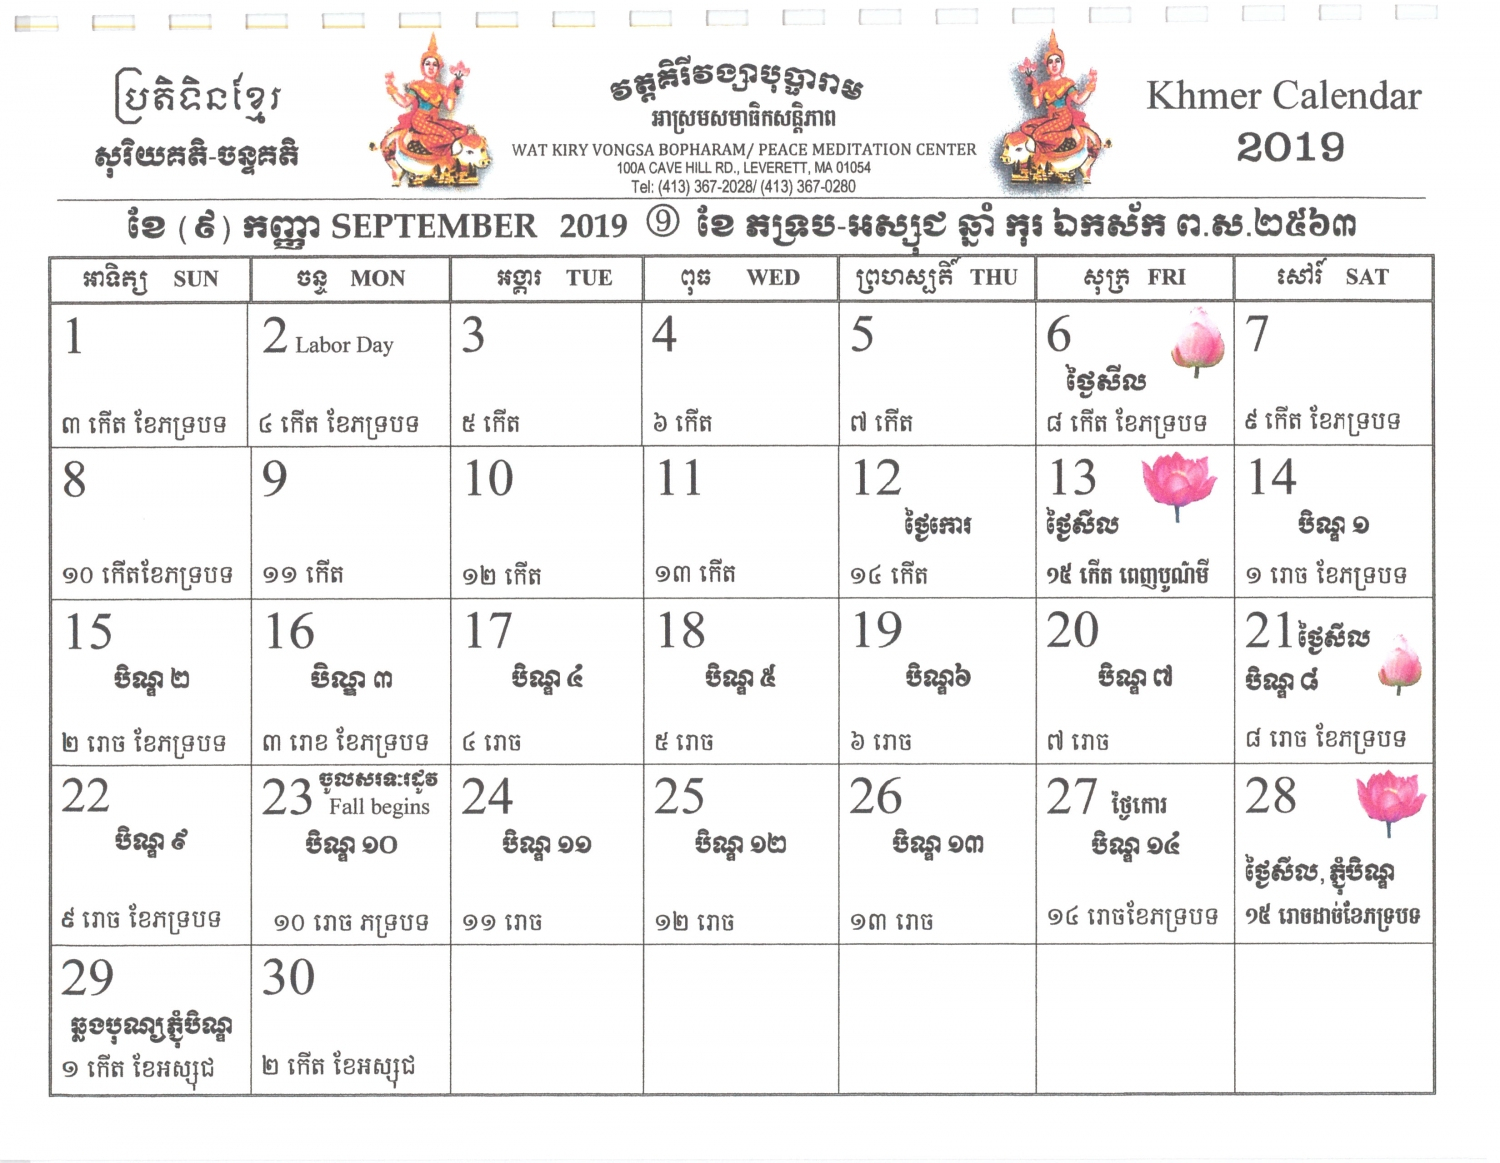 Khmer Calendar 2017 Yearly regarding Khmer Calendar 2020 October